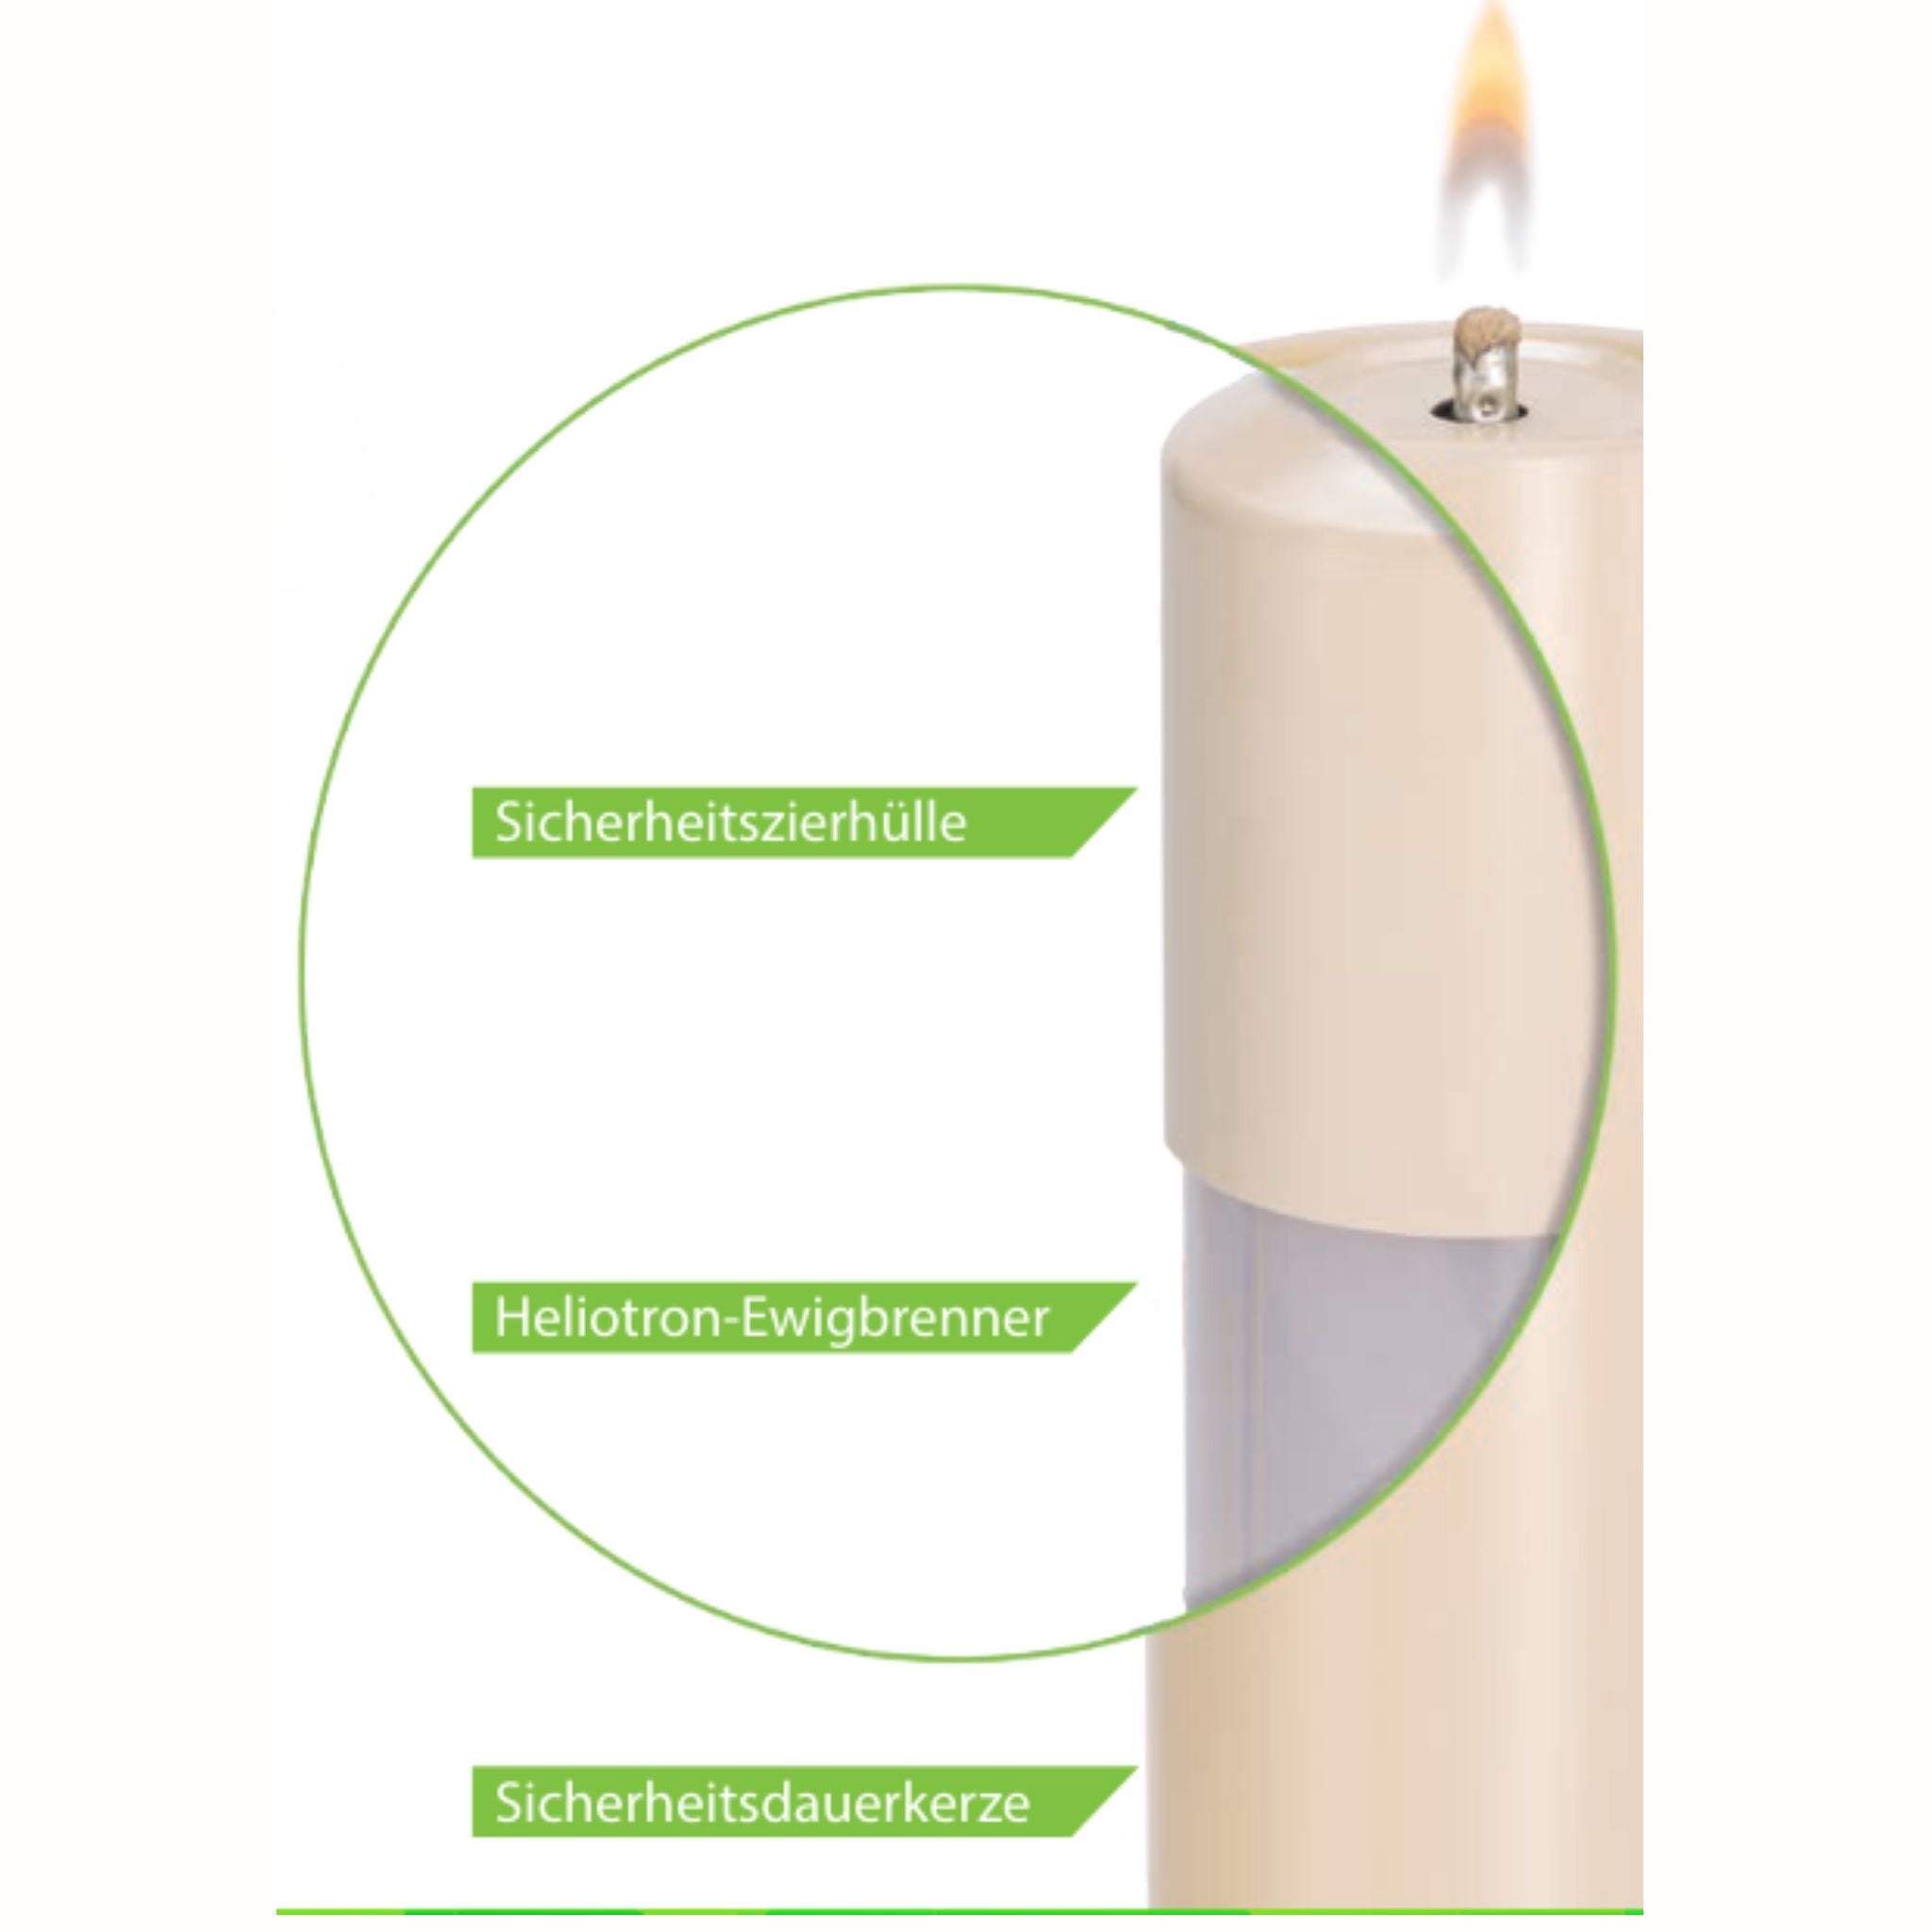 Safety candle for eternal burner 25-oS